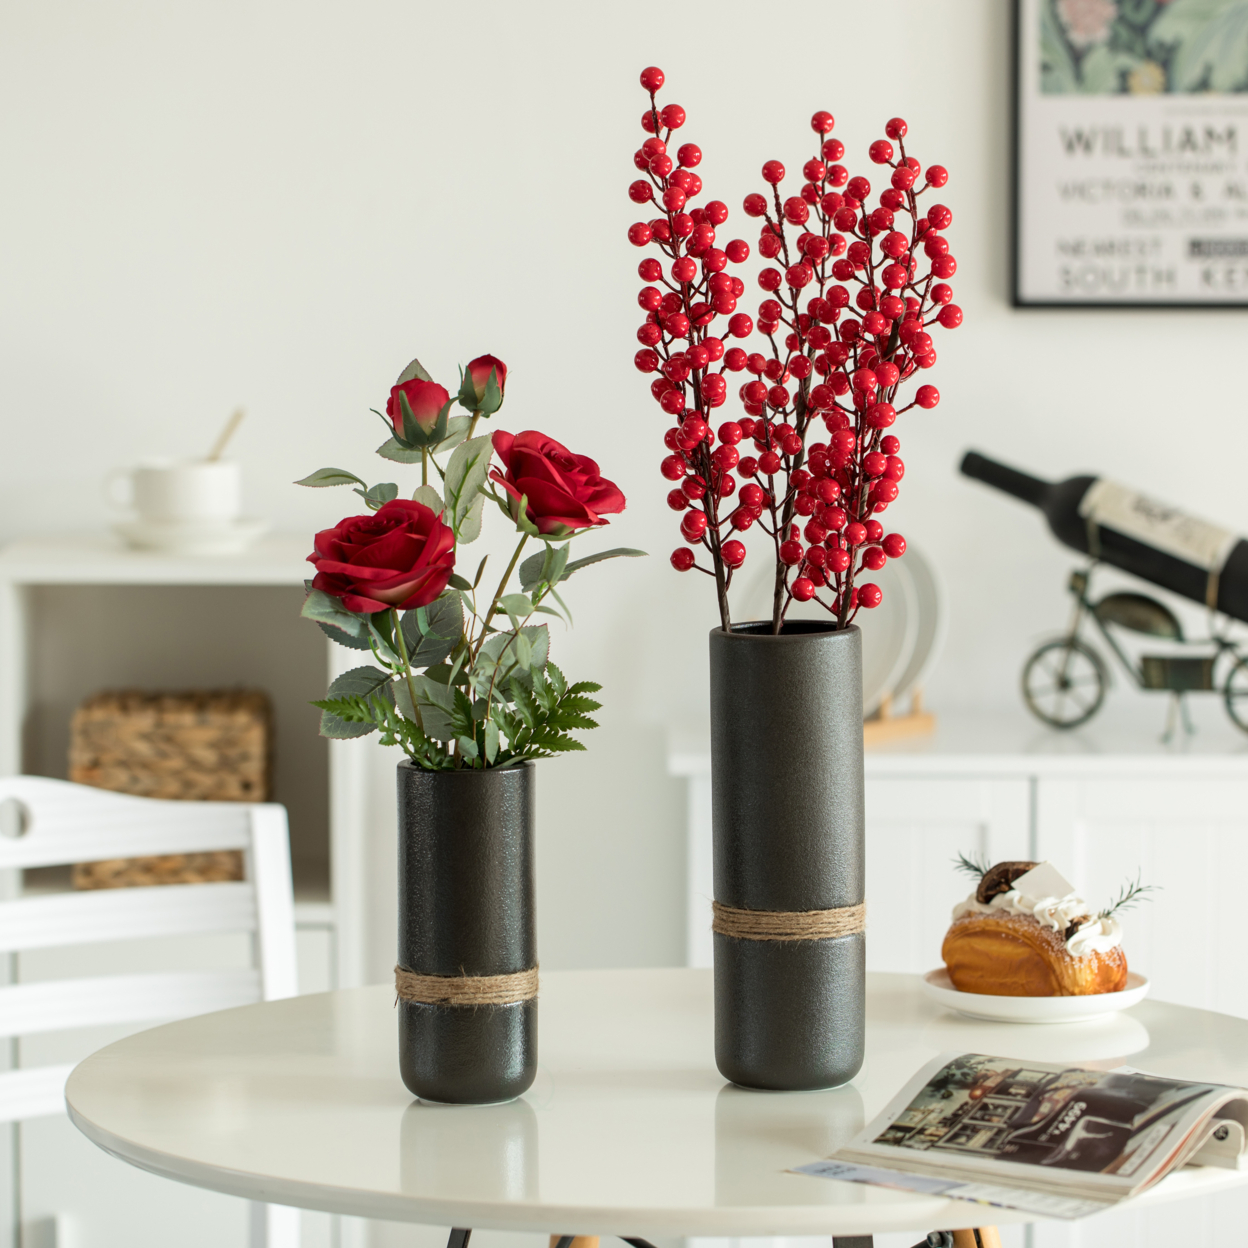 Decorative Modern Ceramic Cylinder Shape Table Vase Flower Holder With Rope - Small Black